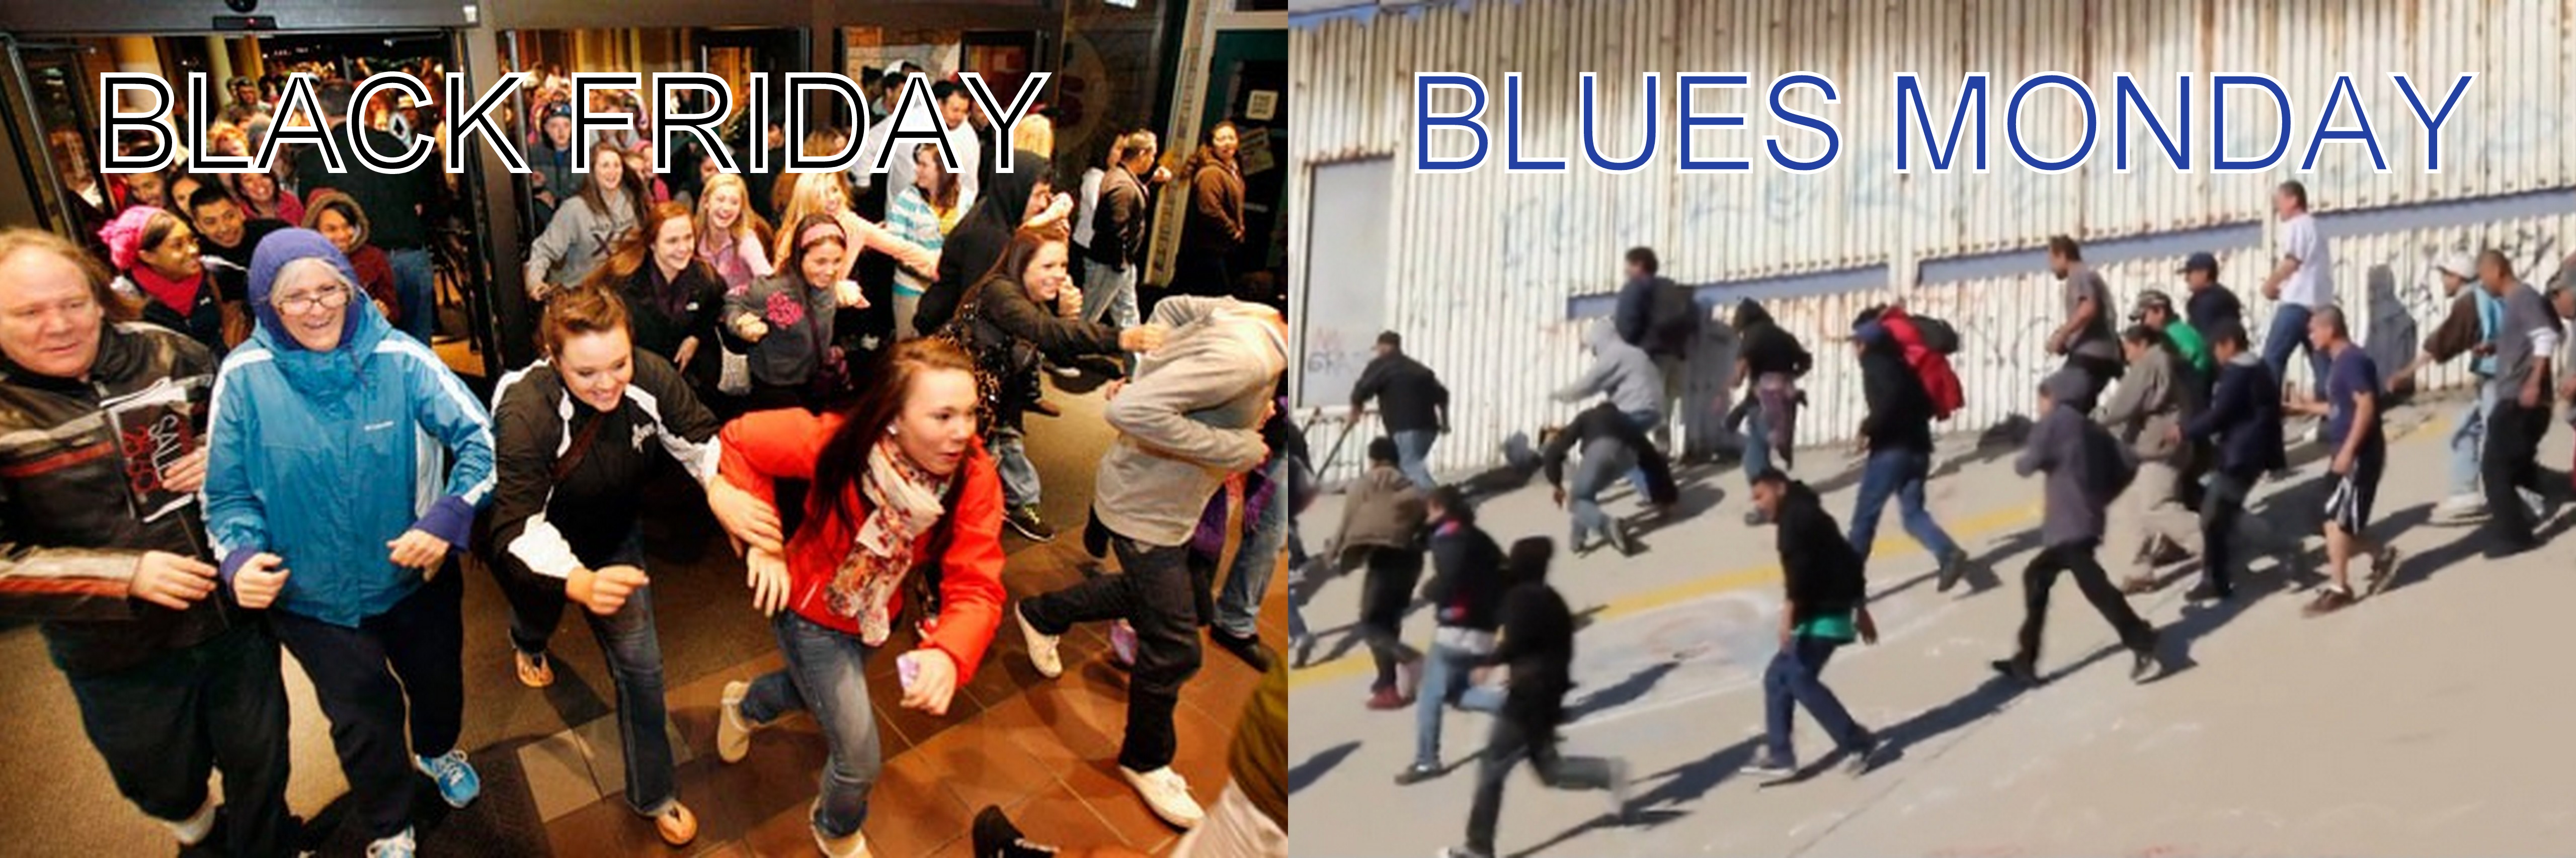 BLACK FRIDADY vs BLUES MONDAY